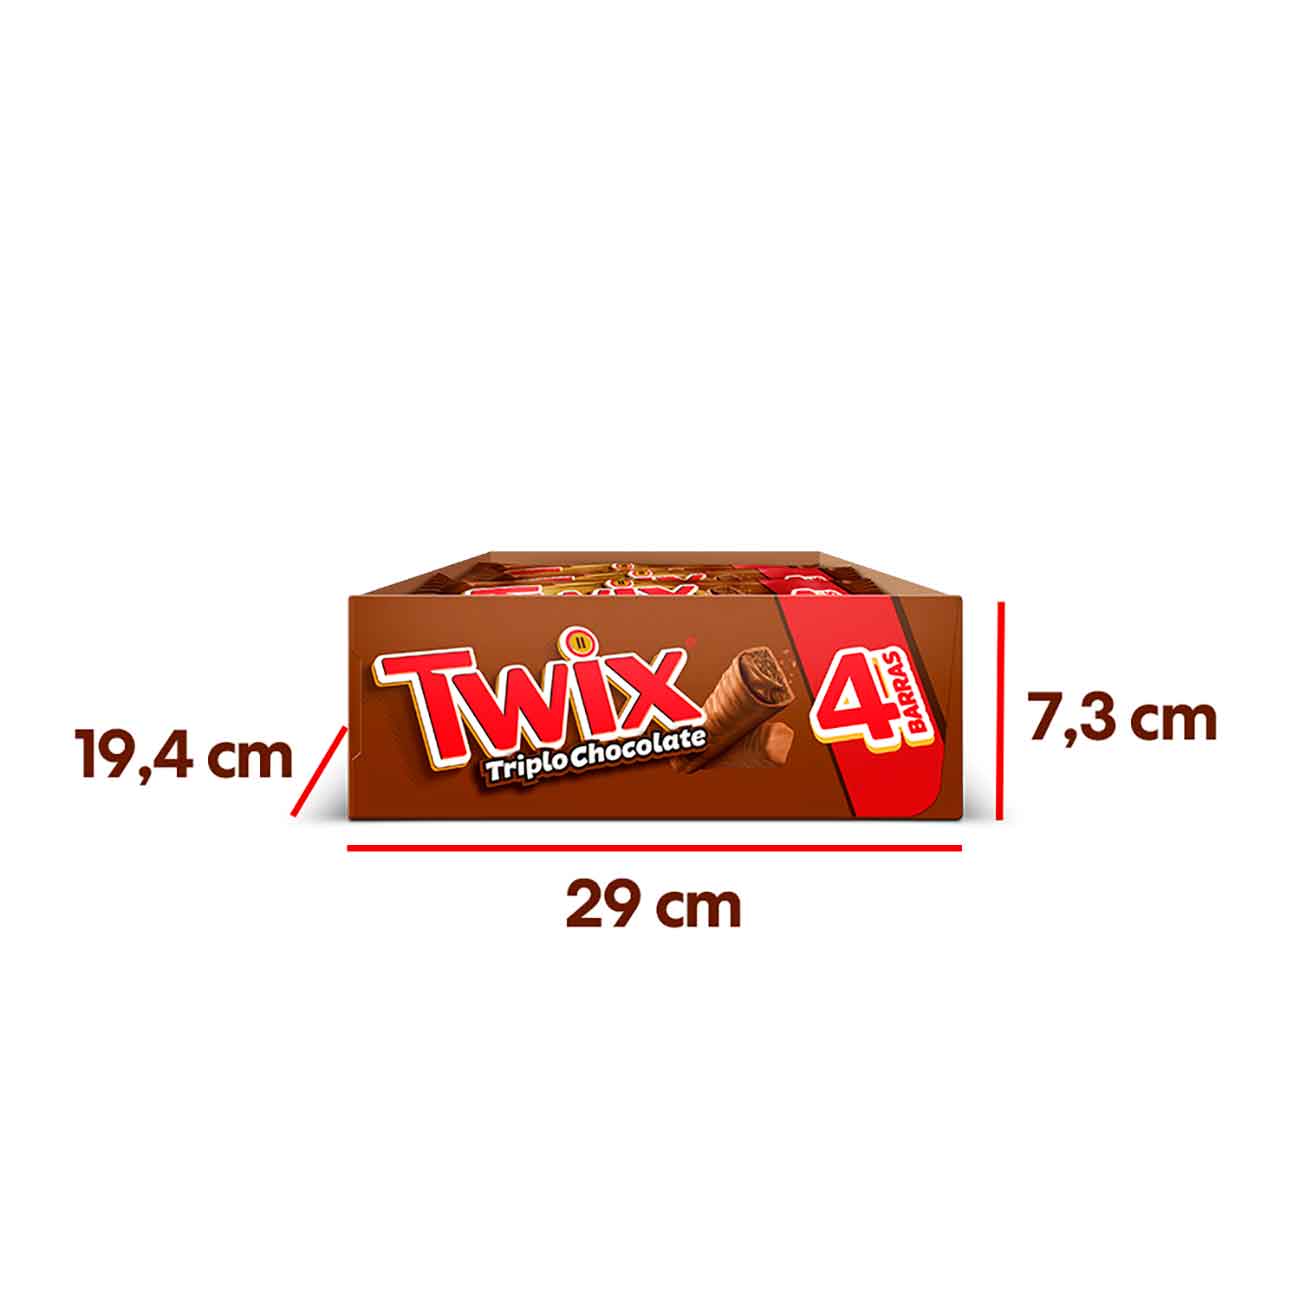 Display Chocolate Twix Triplo Chocolate 80gr